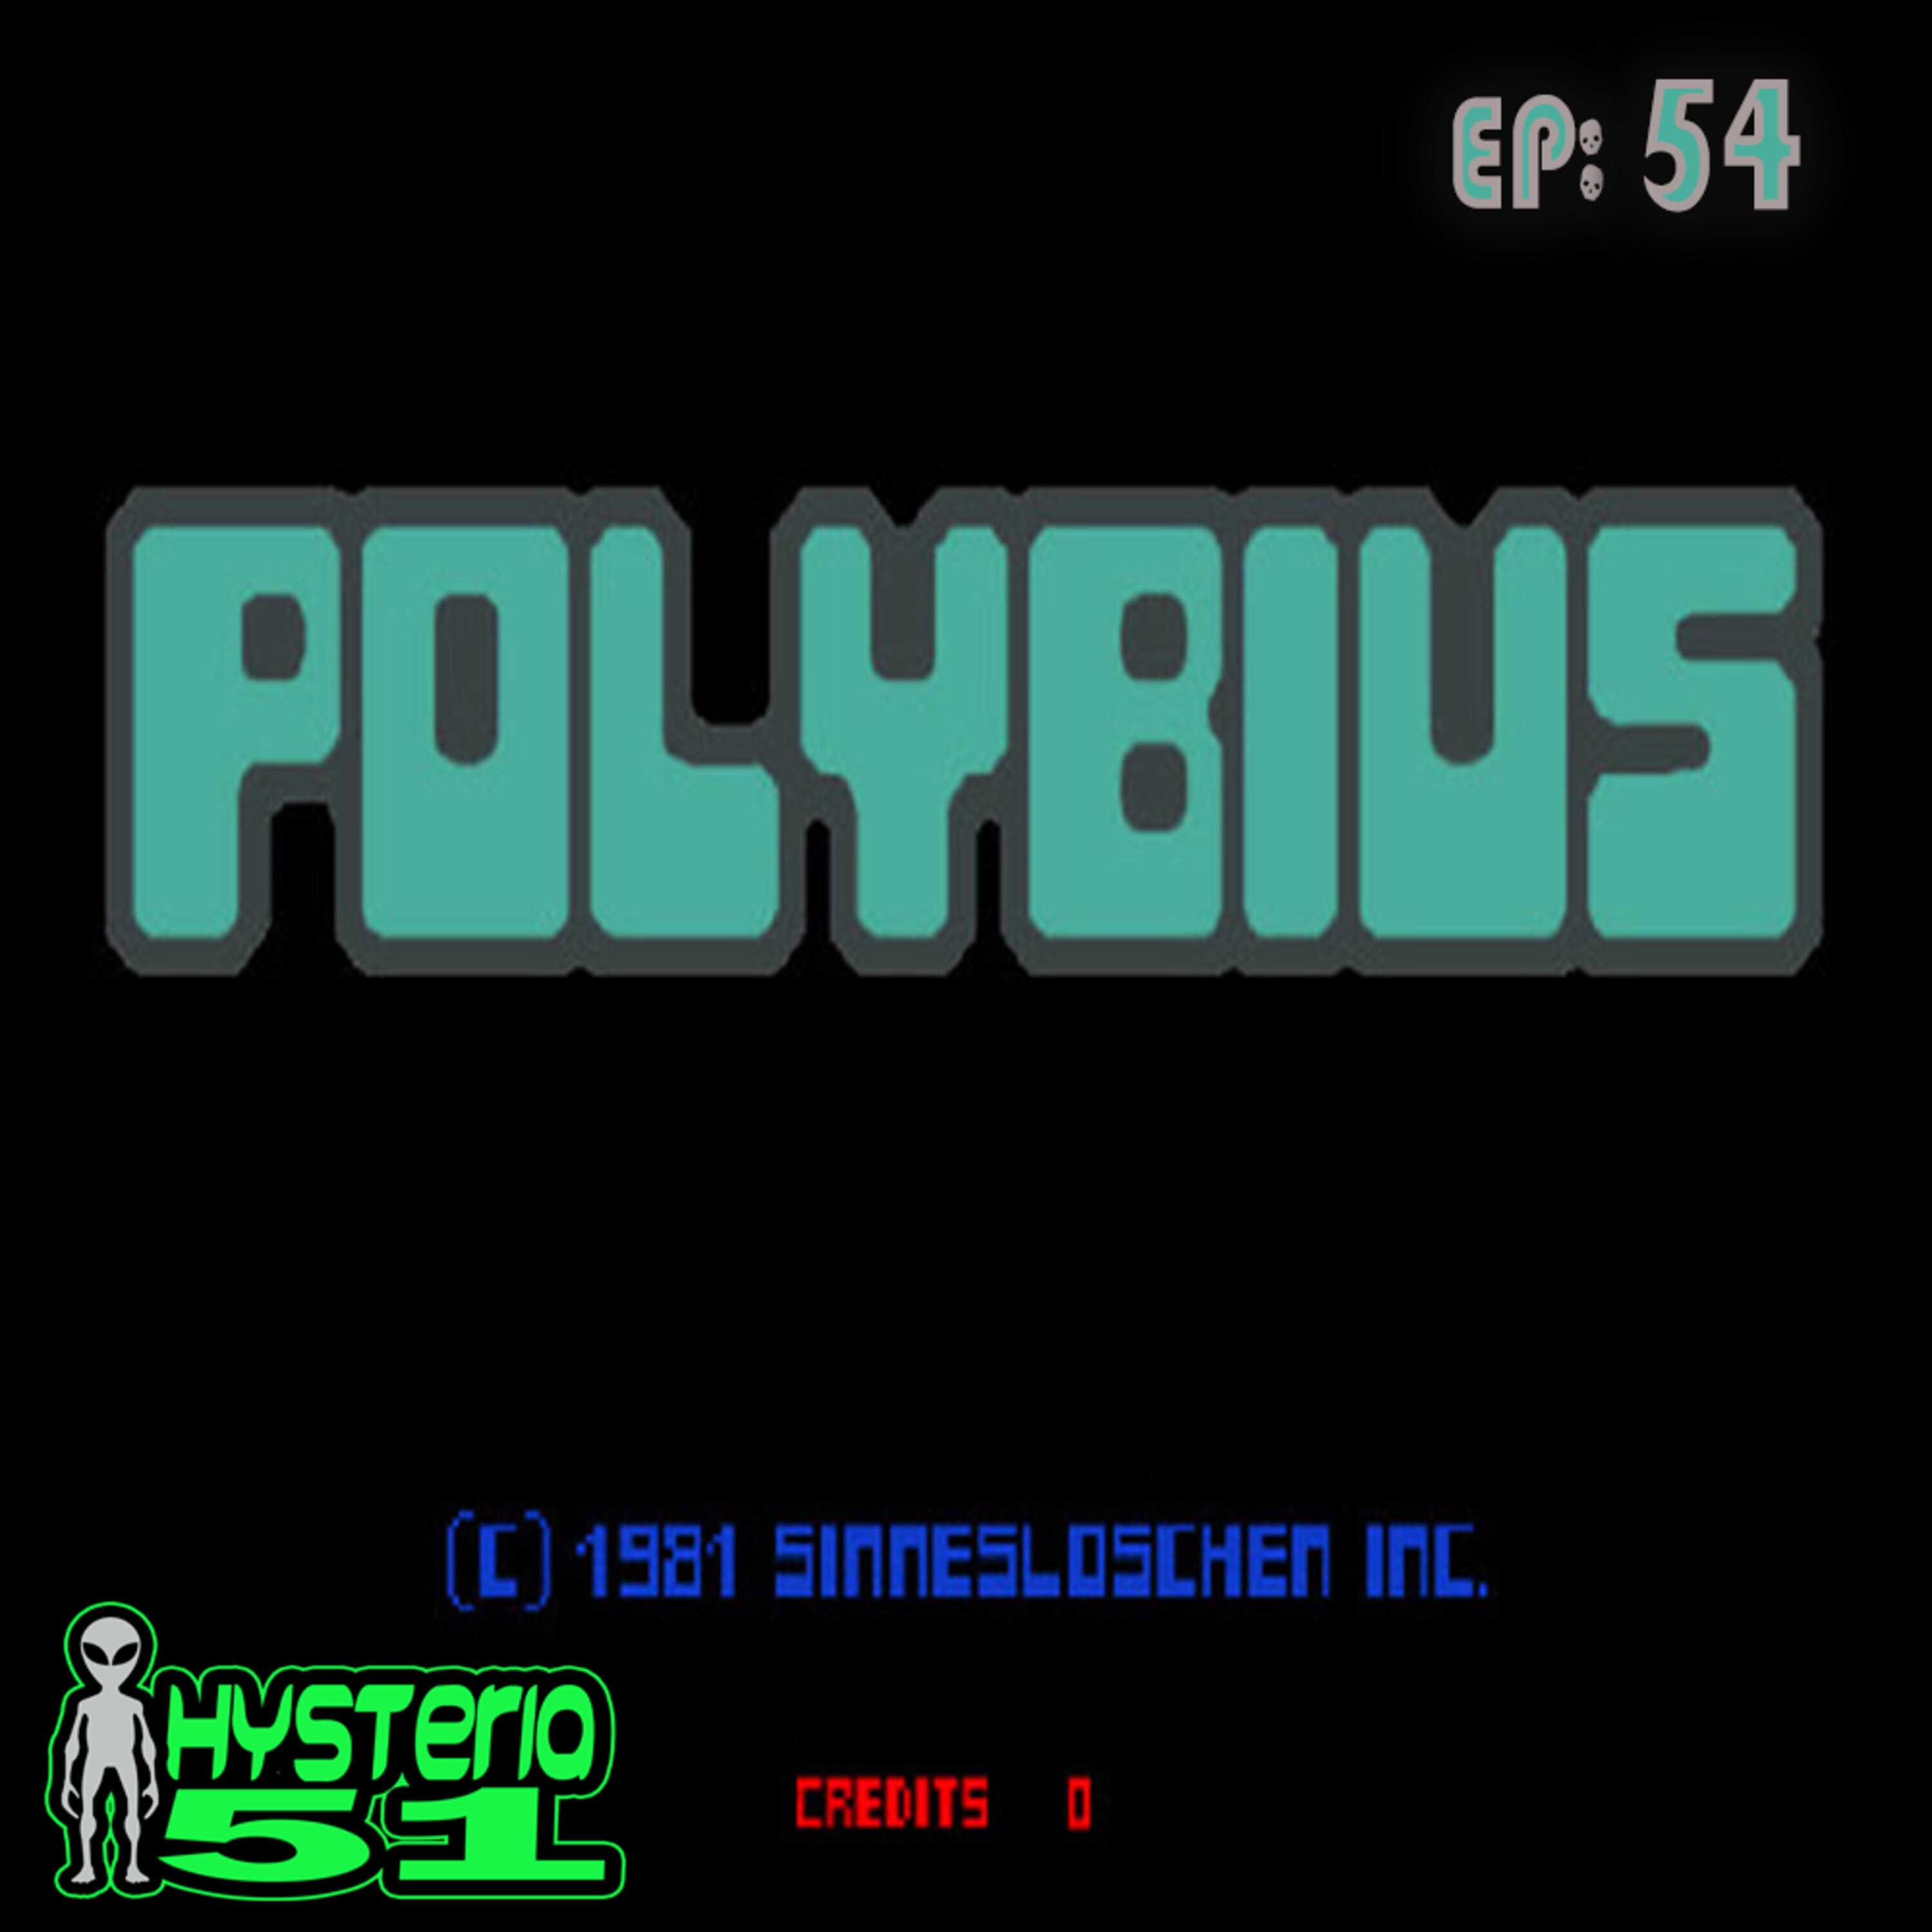 Polybius: The Arcade Game that Kills | 54